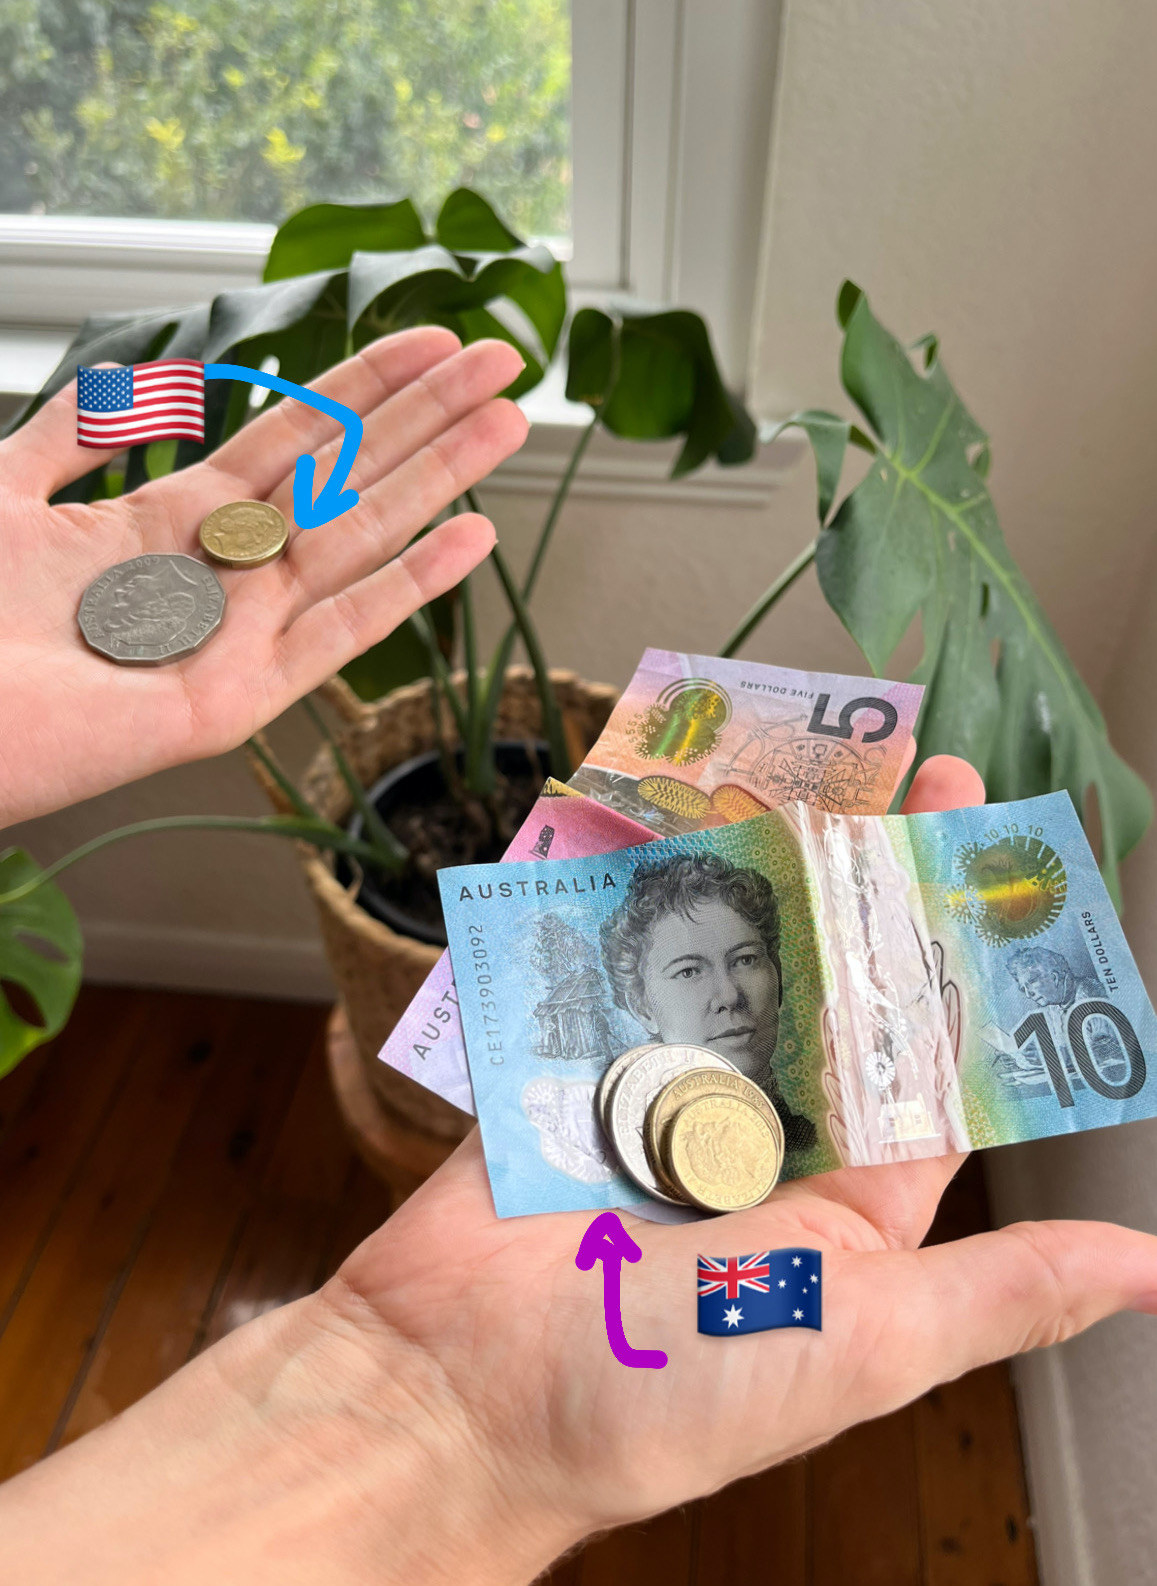 One hand holding American money, one holding Australian money